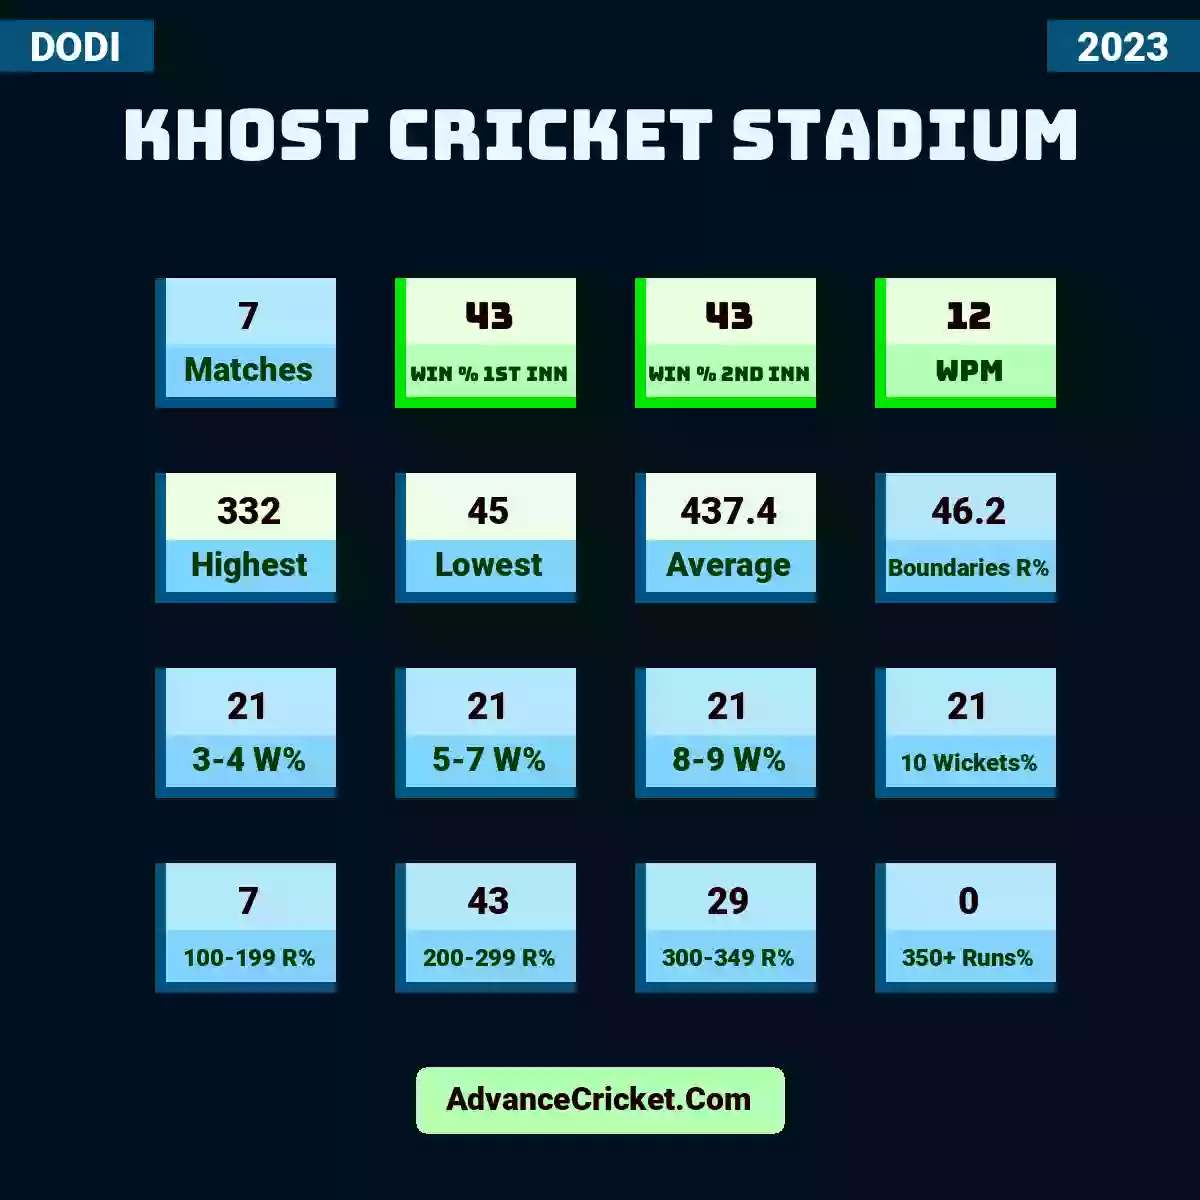 Image showing Khost Cricket Stadium with Matches: 7, Win % 1st Inn: 43, Win % 2nd Inn: 43, WPM: 12, Highest: 332, Lowest: 45, Average: 437.4, Boundaries R%: 46.2, 3-4 W%: 21, 5-7 W%: 21, 8-9 W%: 21, 10 Wickets%: 21, 100-199 R%: 7, 200-299 R%: 43, 300-349 R%: 29, 350+ Runs%: 0.